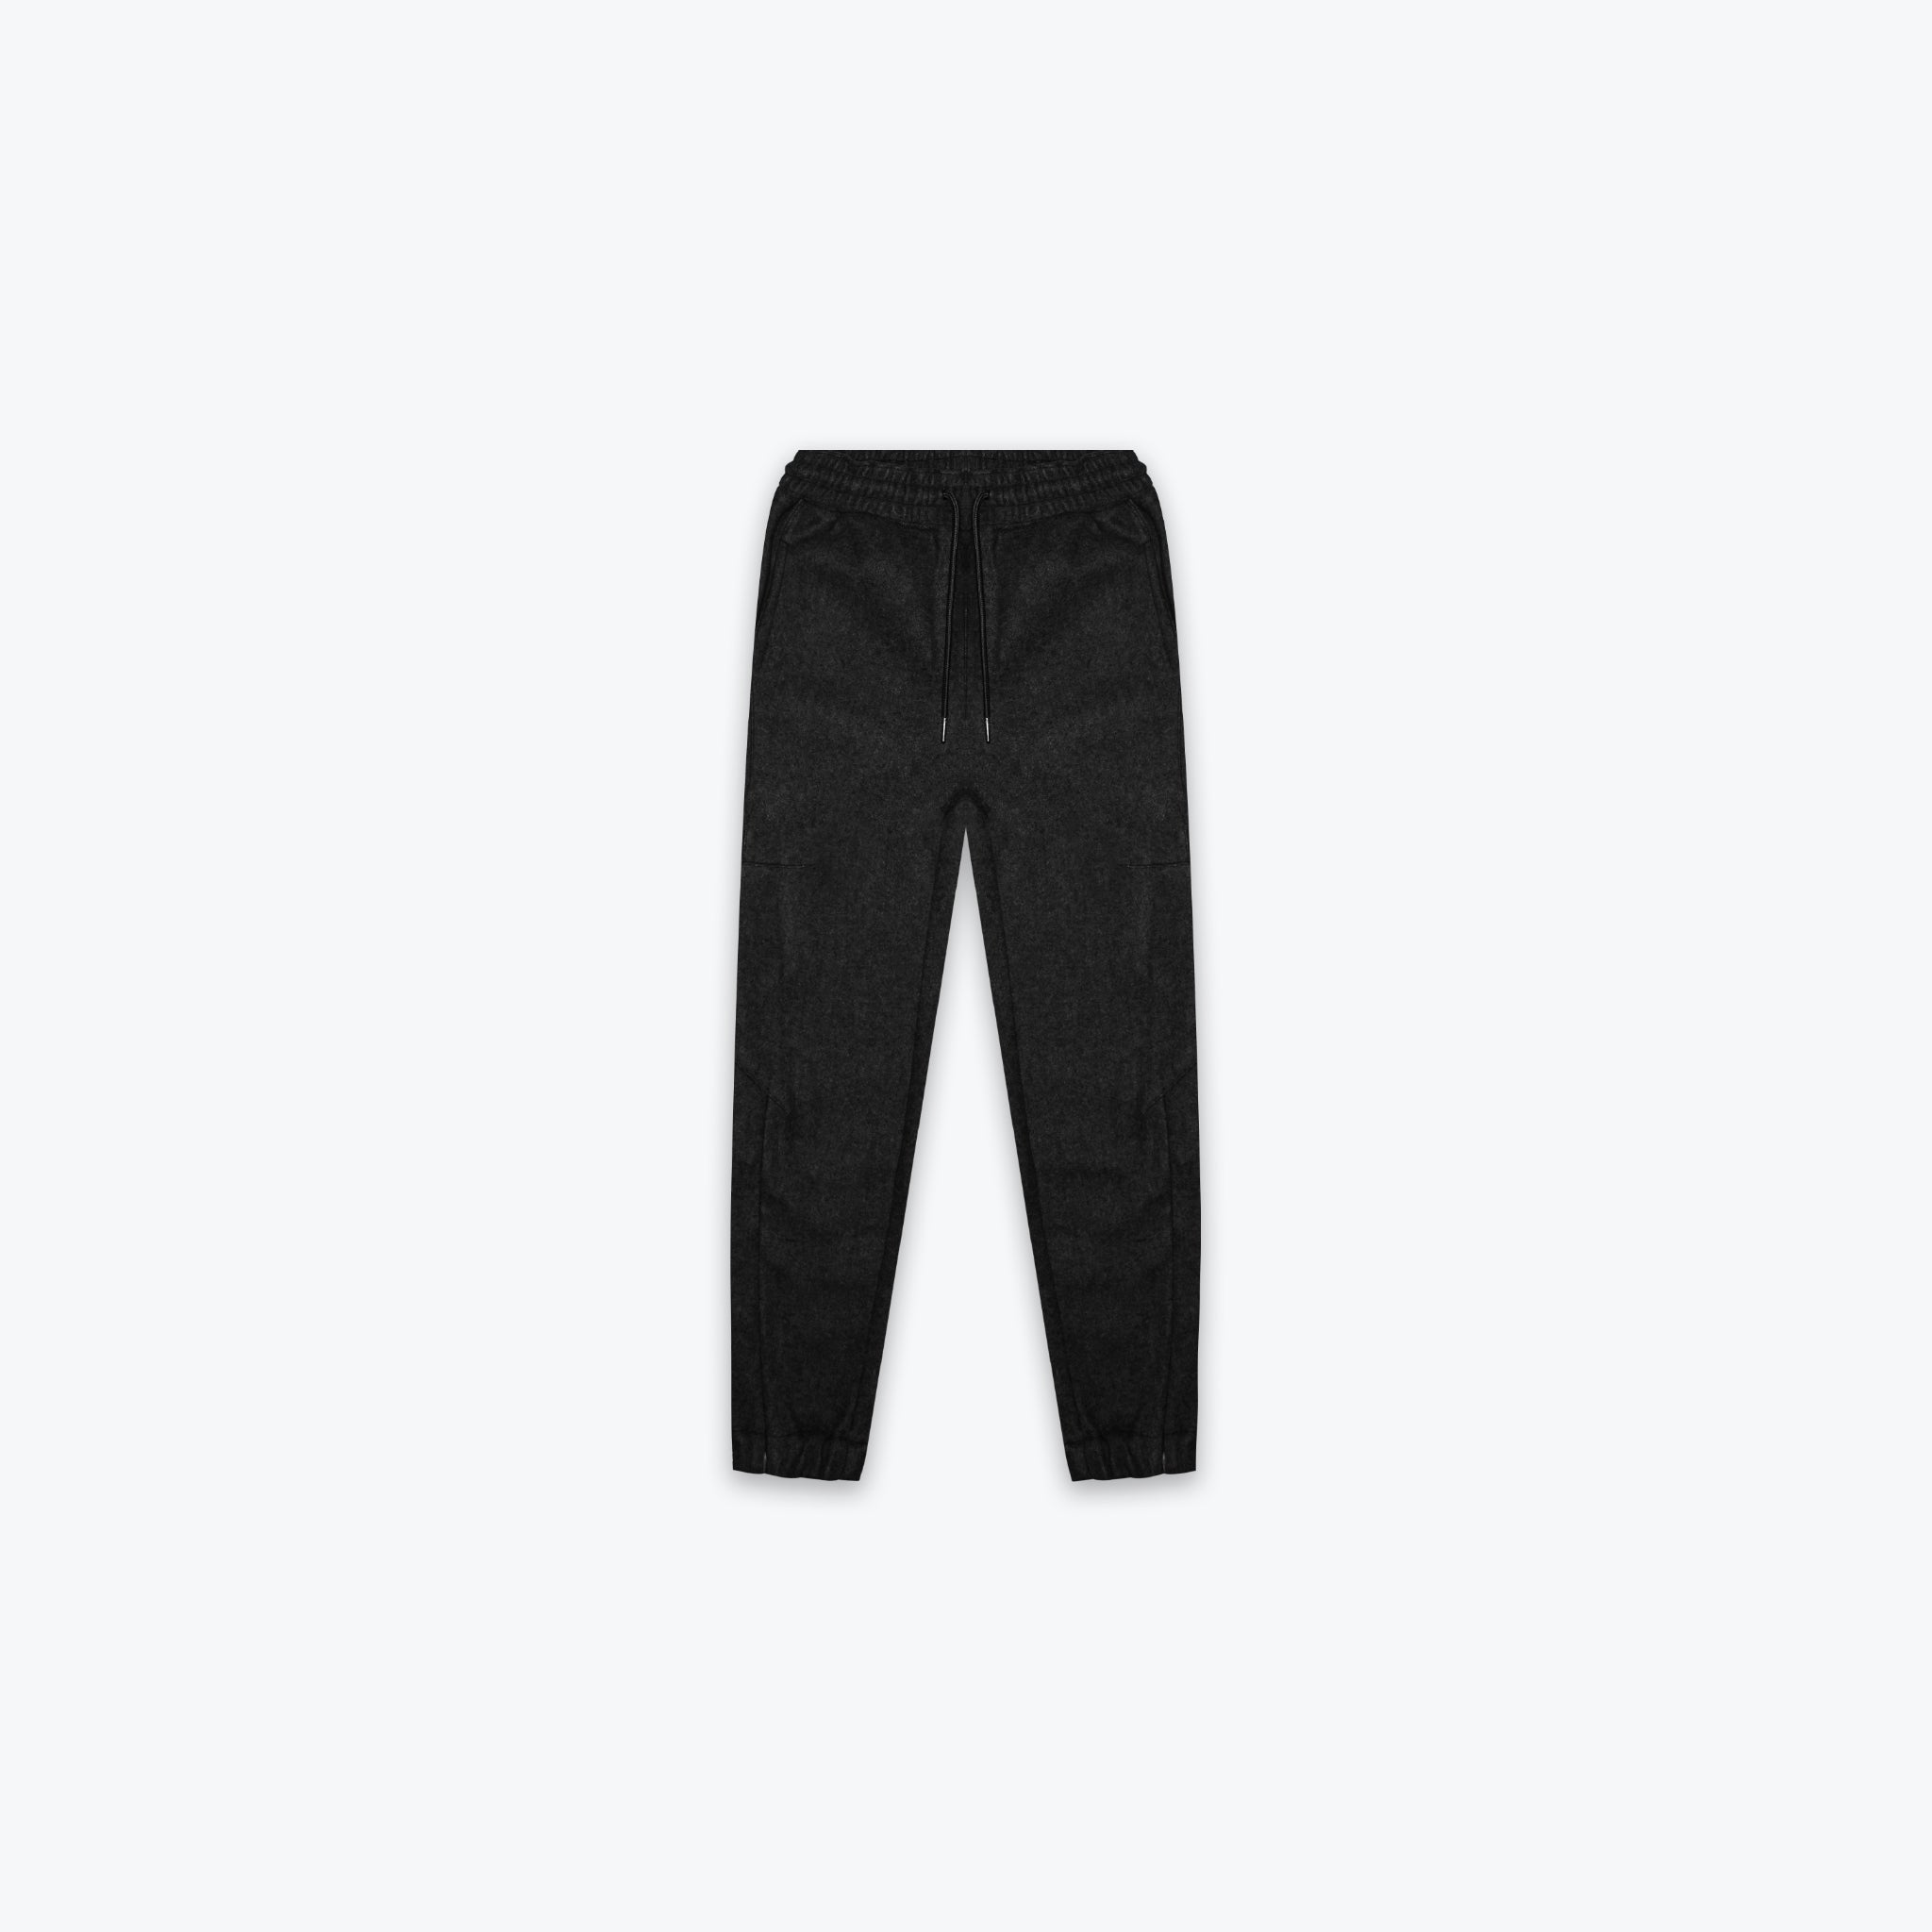 Buy Halti Leisti Recy Short Rain Pants Black Size 20-24 Online